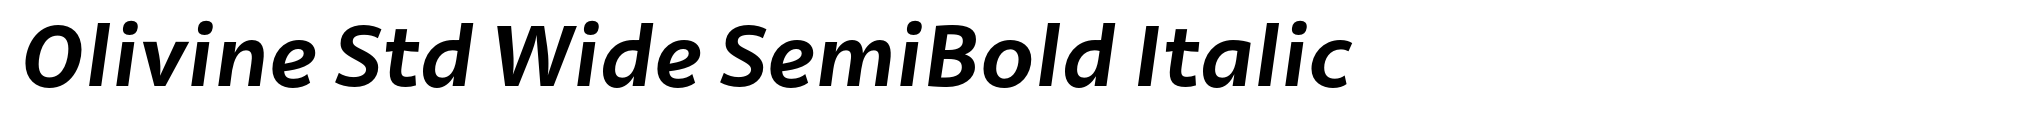 Olivine Std Wide SemiBold Italic image